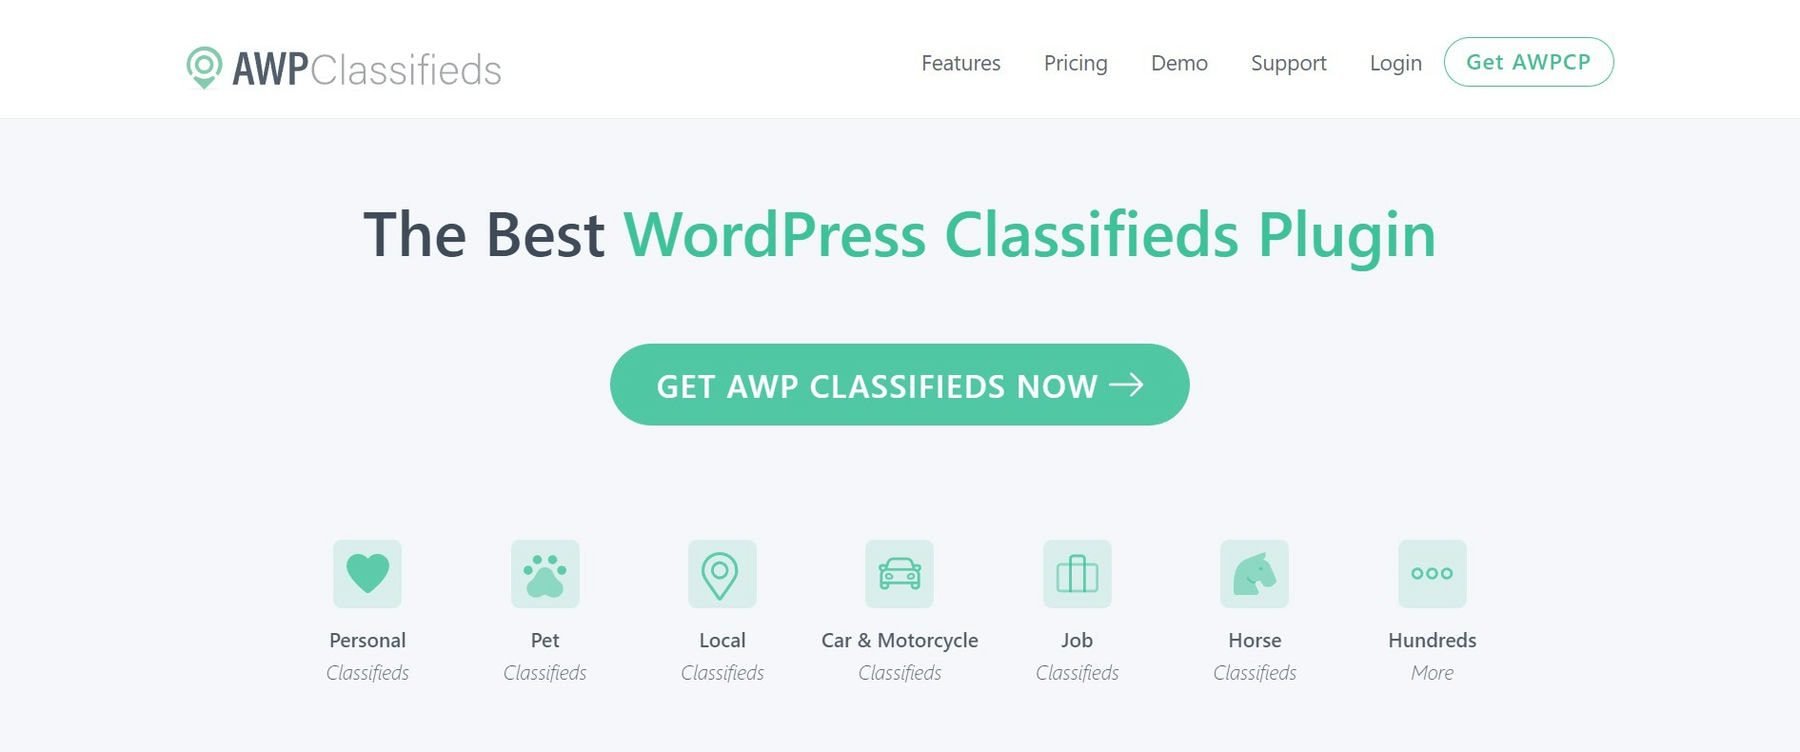 AWP Classified Plugin Homepage Feb 2023